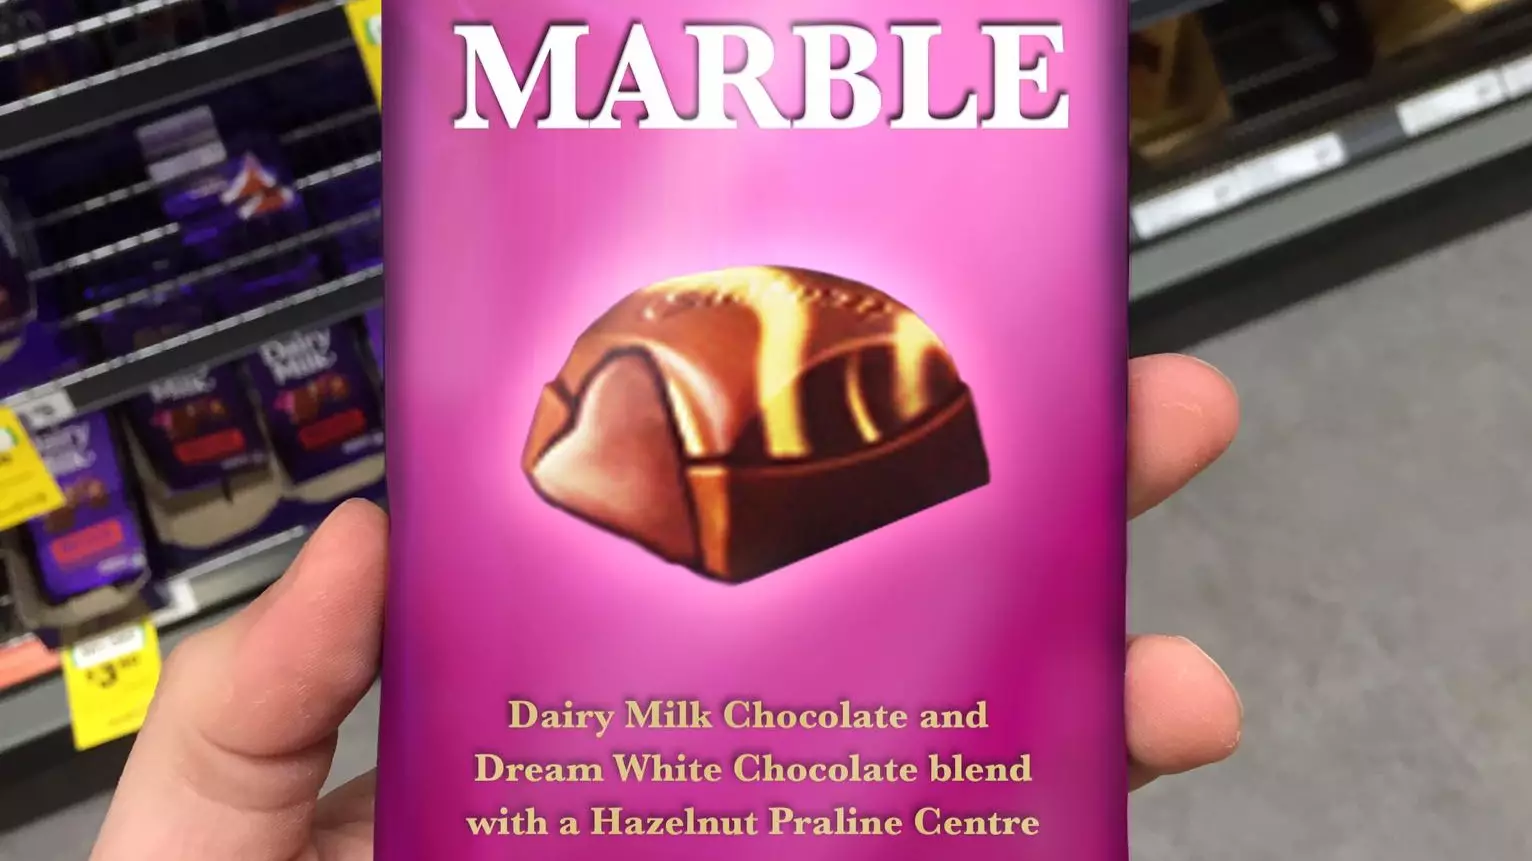 Facebook Group Has 'Proof' Cadbury Is Bringing Back Marble To Australia